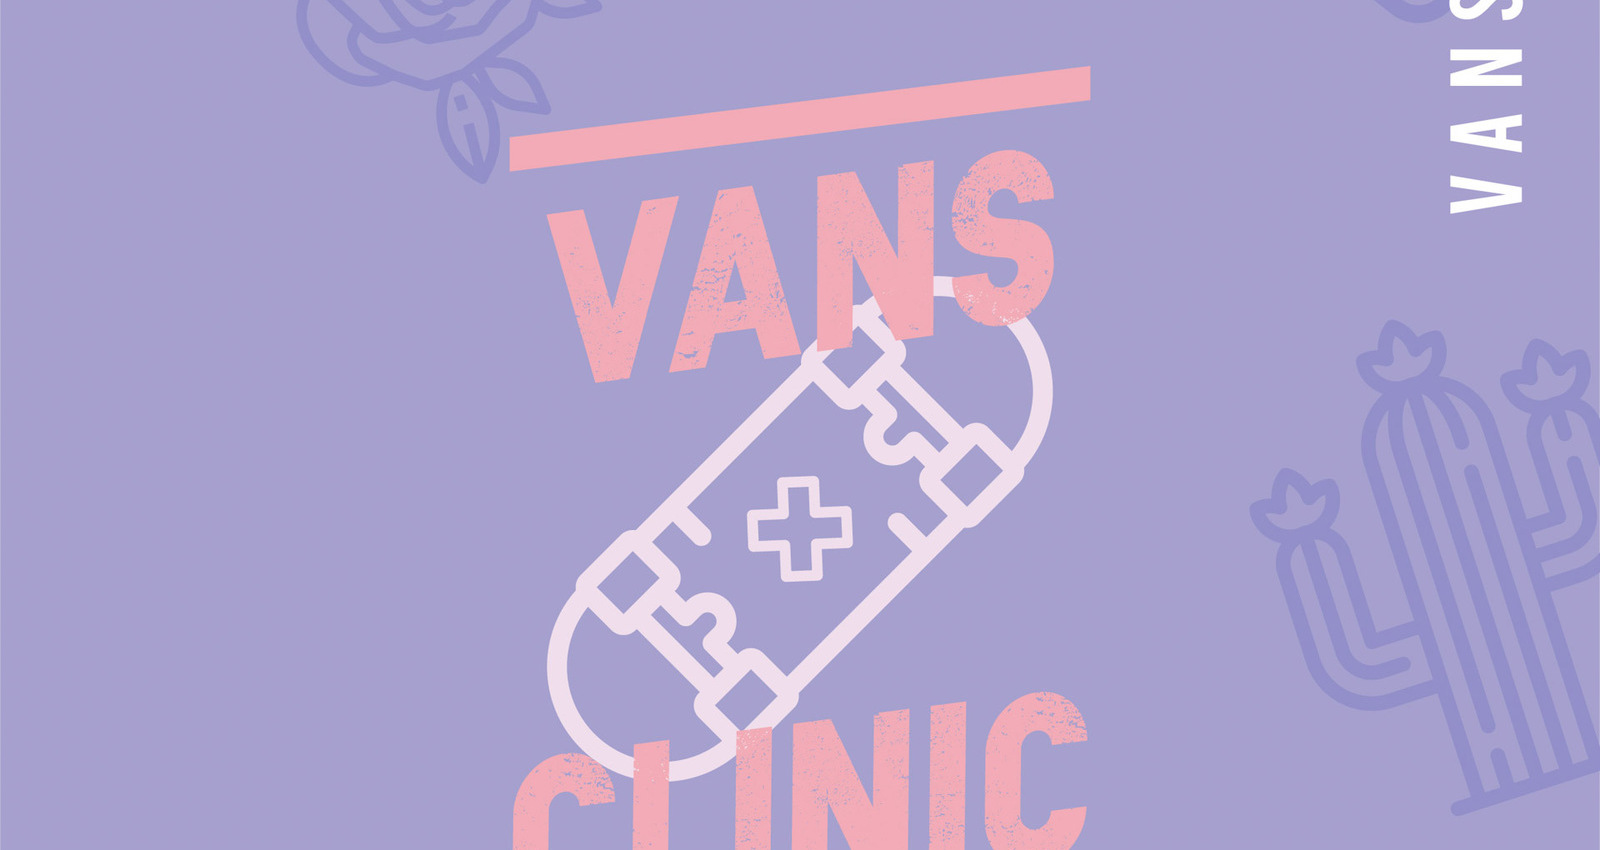 Vans Clinic